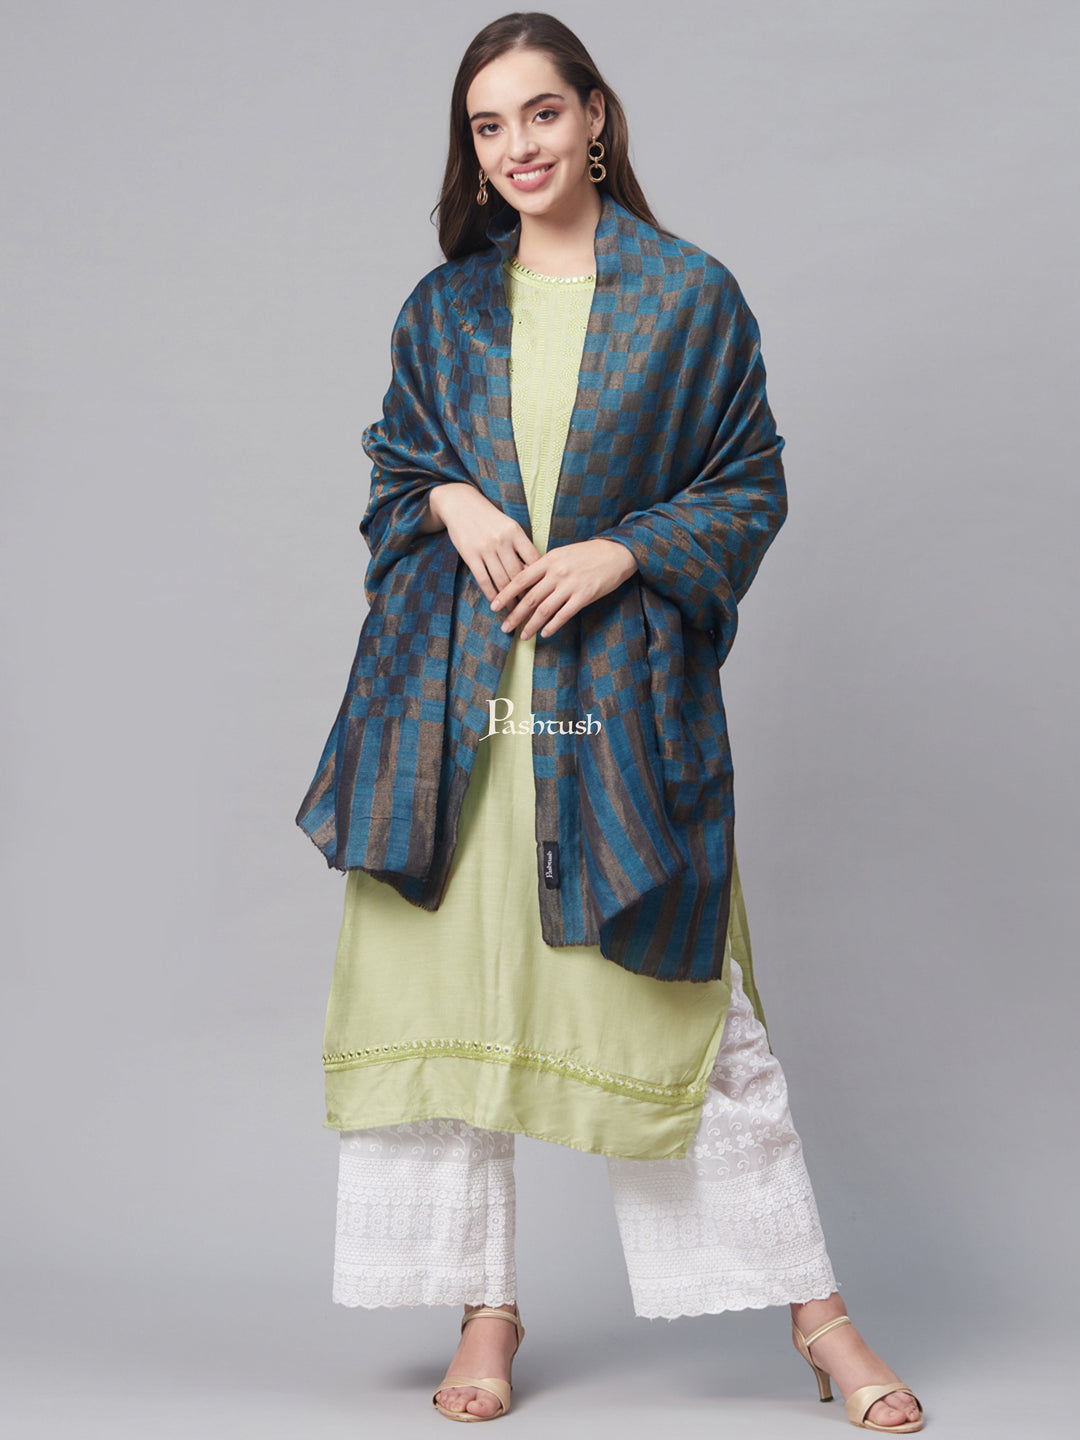 Pashtush India Womens Stoles and Scarves Scarf Pashtush Women Teal Blue Charcoal Grey Woven Design Designer Stole